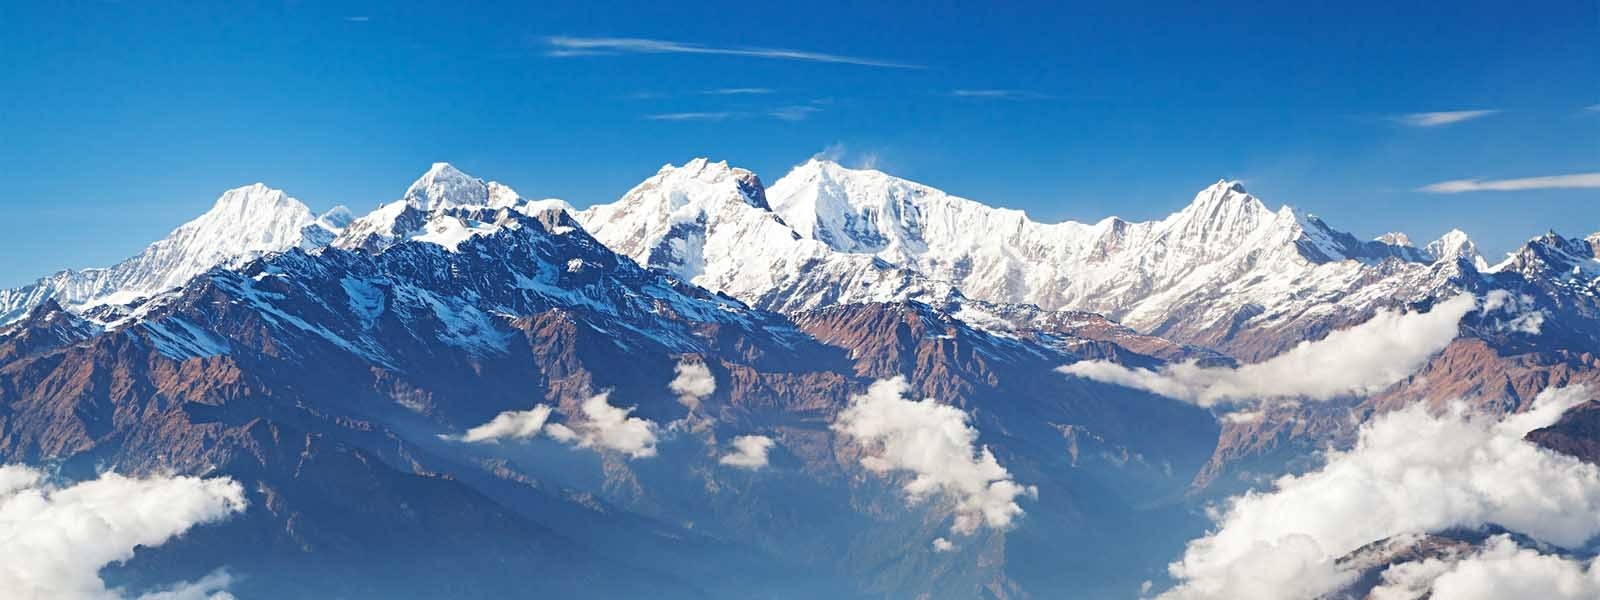 Snowy Mountain Views from Kathmandu